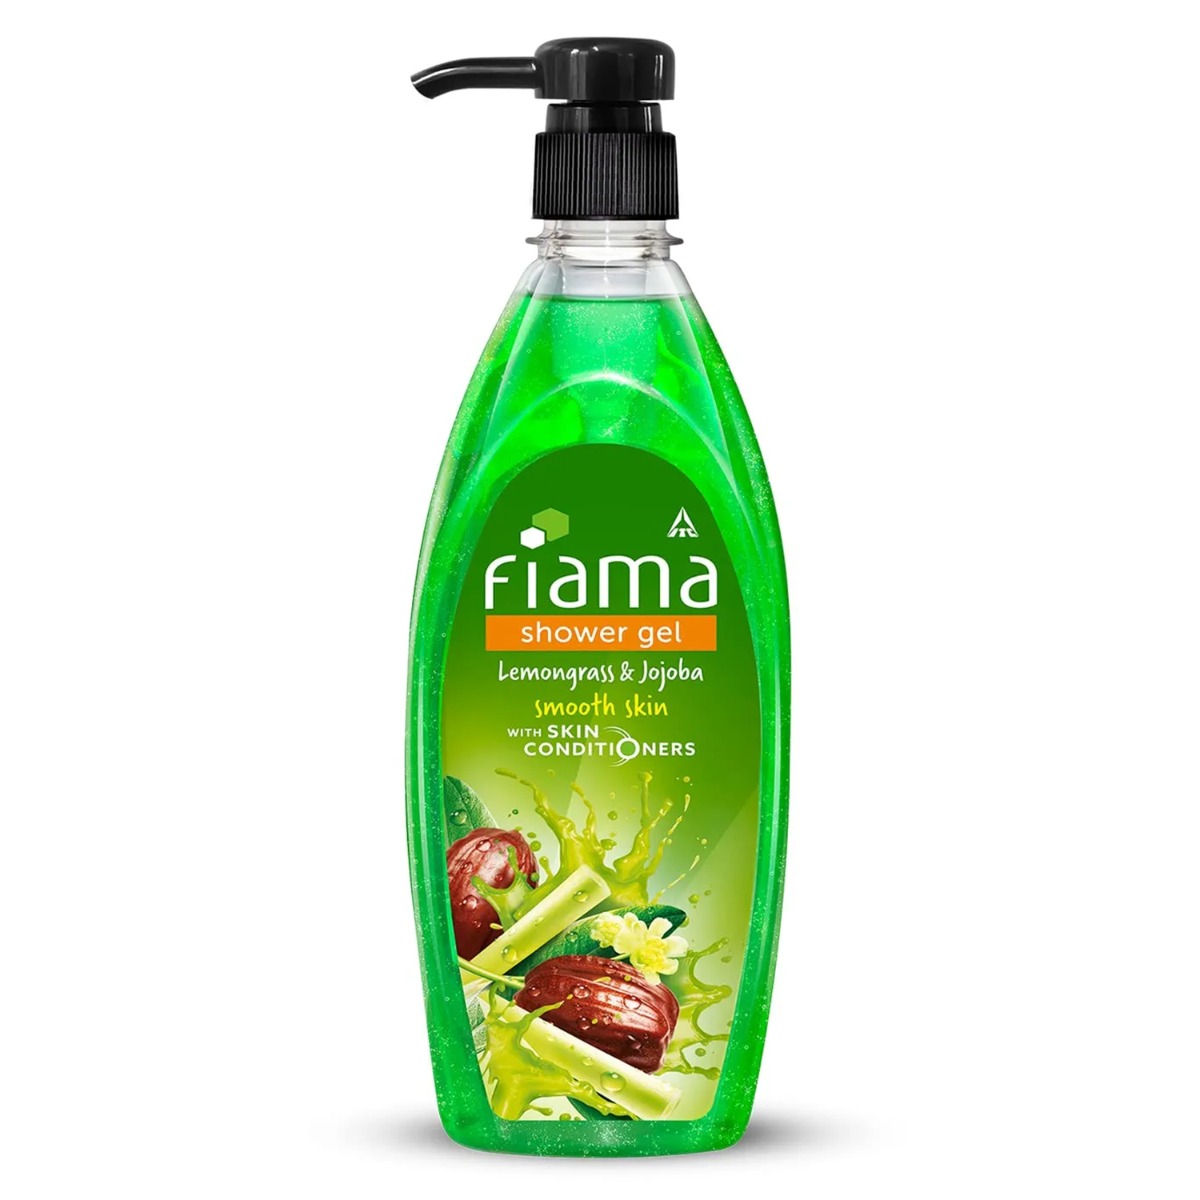 Fiama Shower Gel Lemongrass & Jojoba Body Wash With Skin Conditioners For Smooth Skin, 500ml